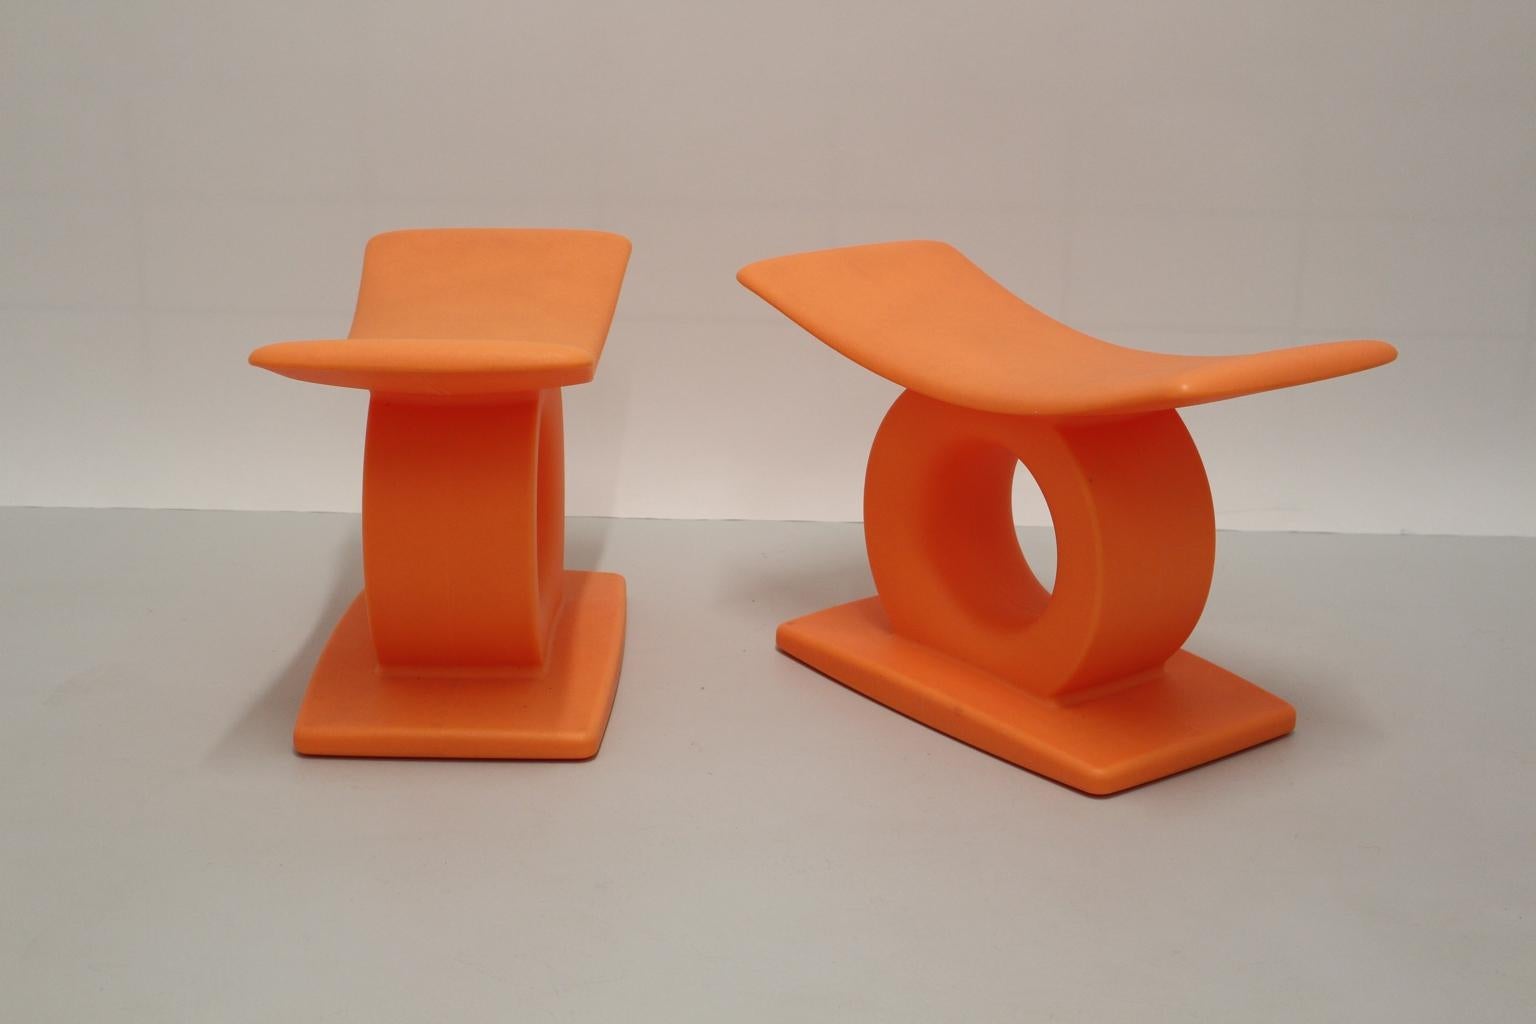 Modern Orange Matteo Thun Vintage Tam Tam Plastic Stools 2002 Italy For Sale